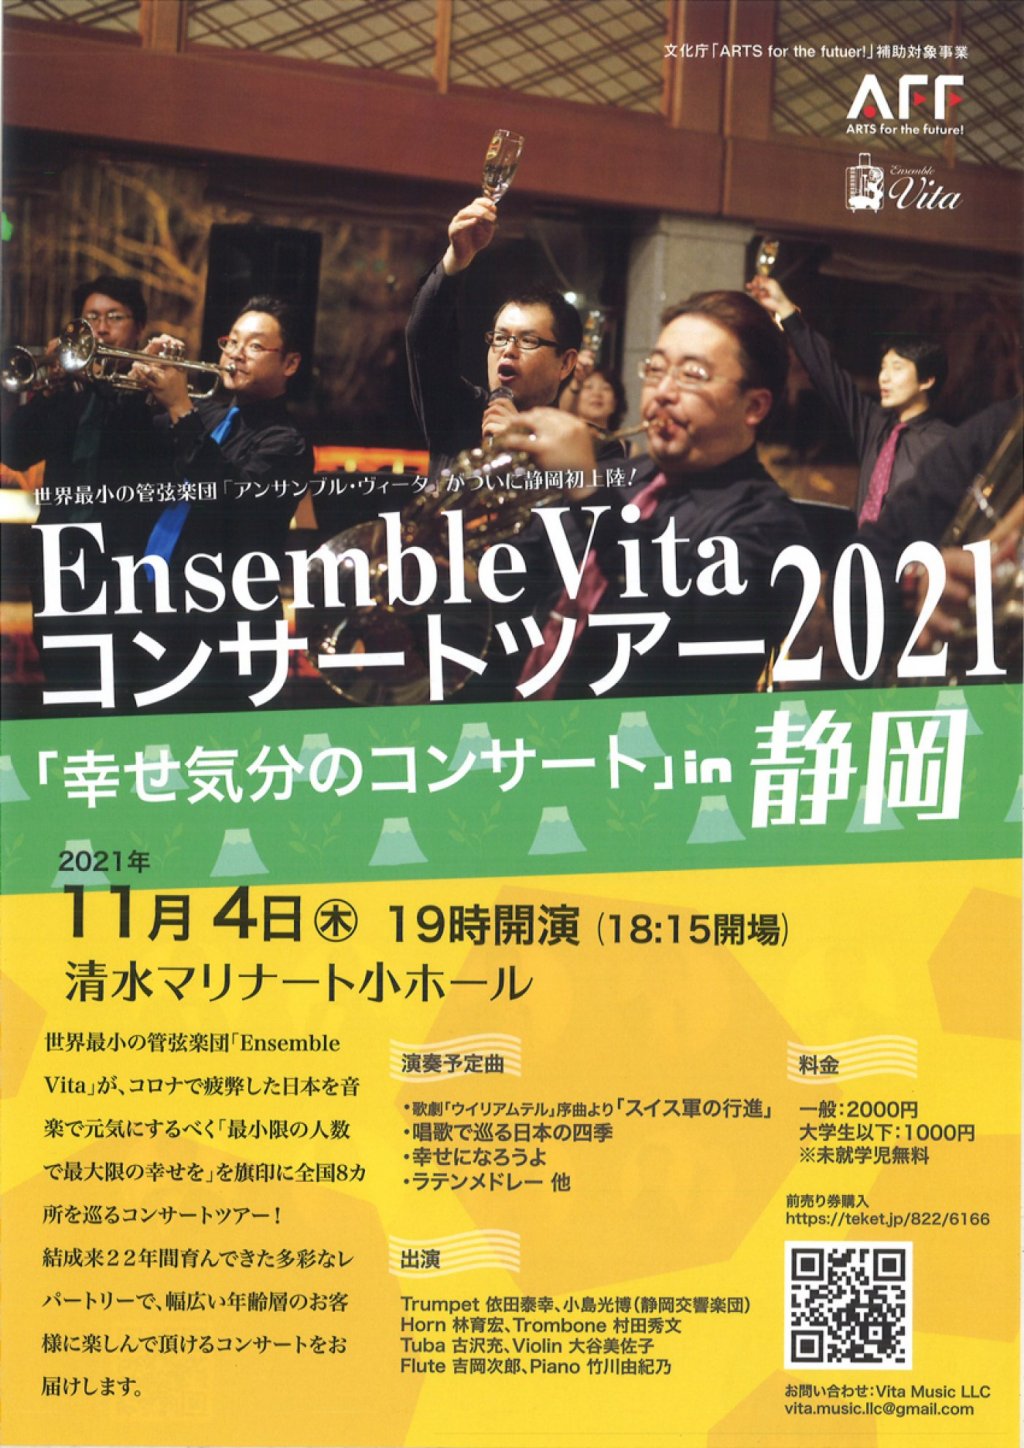 Ensemble VITA 幸せ気分のコンサート in 静岡